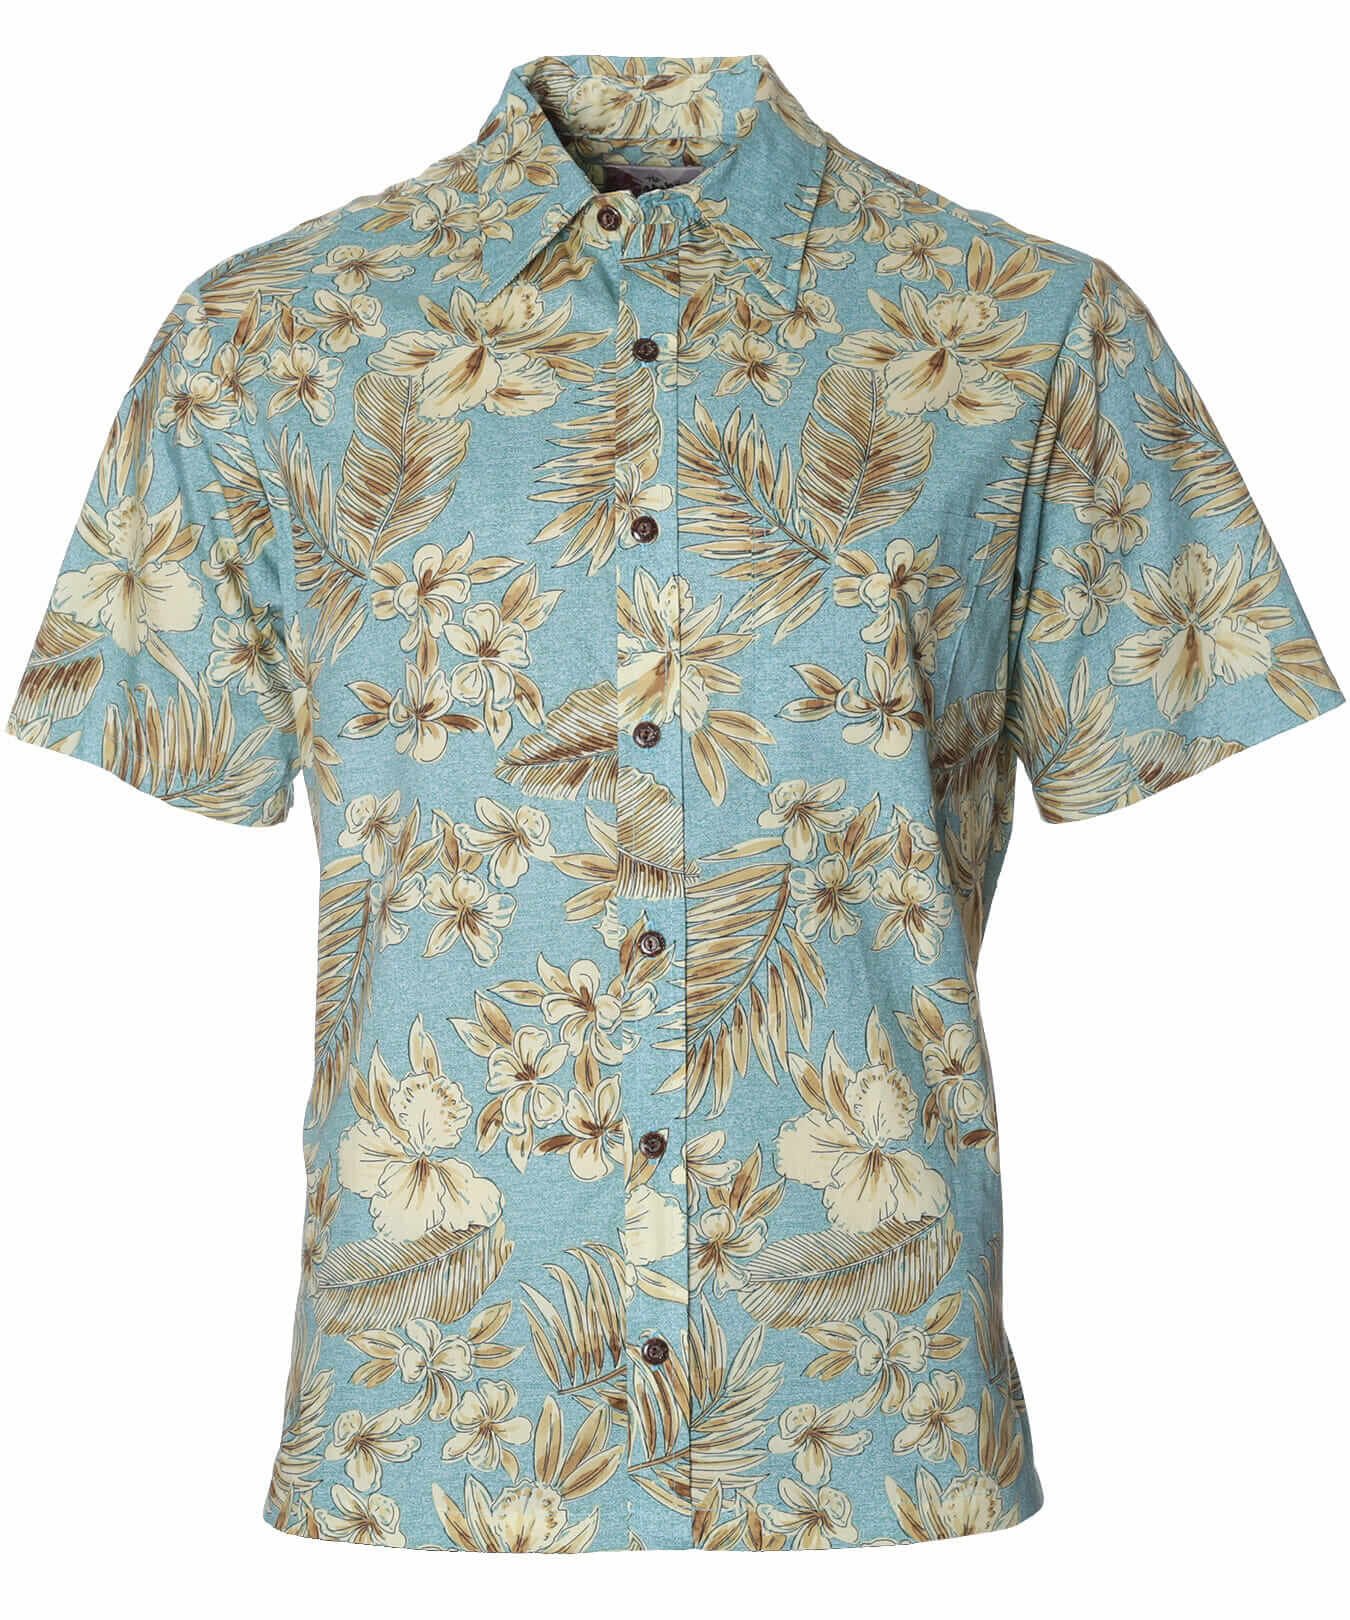 Island Vives Men's Aloha Shirt Turquoise